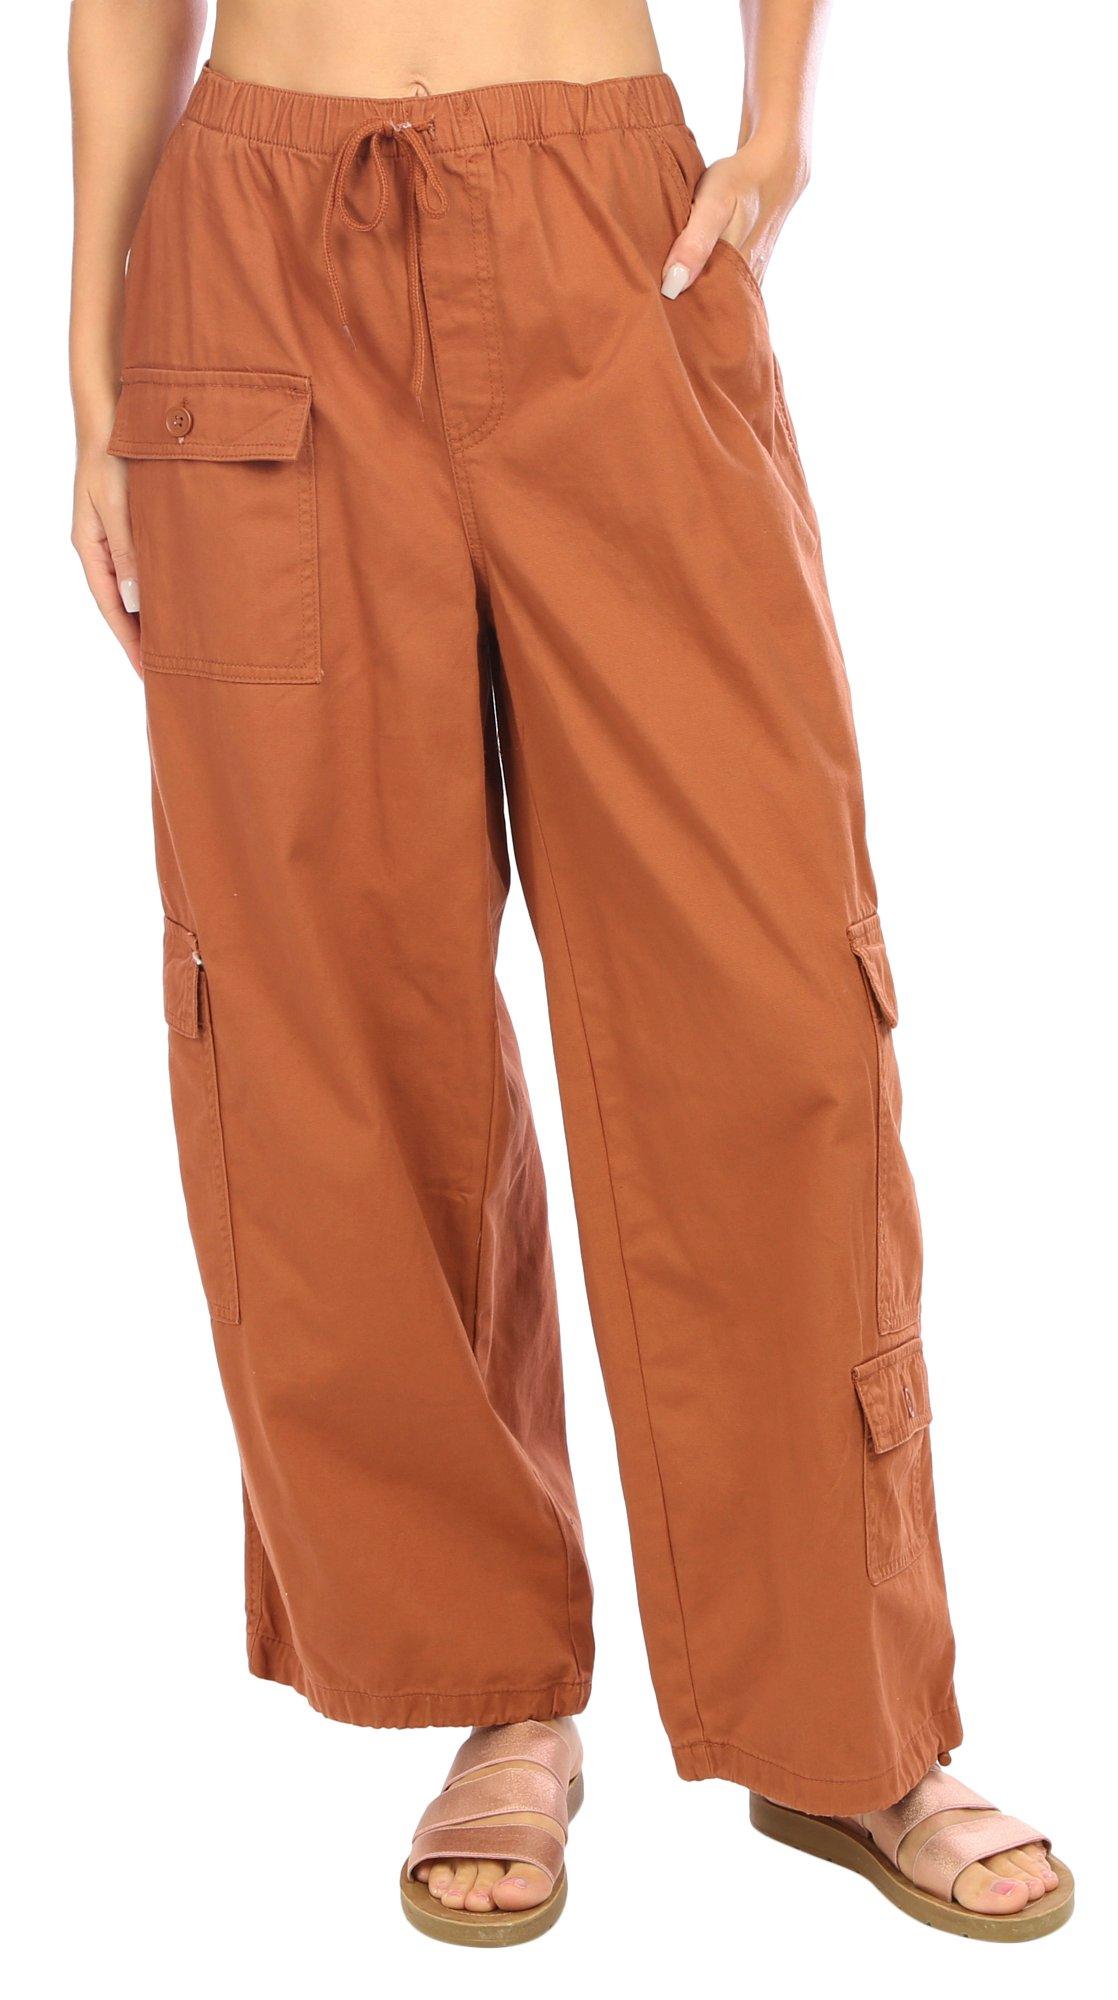 Juniors Solid Color Cargo Pants